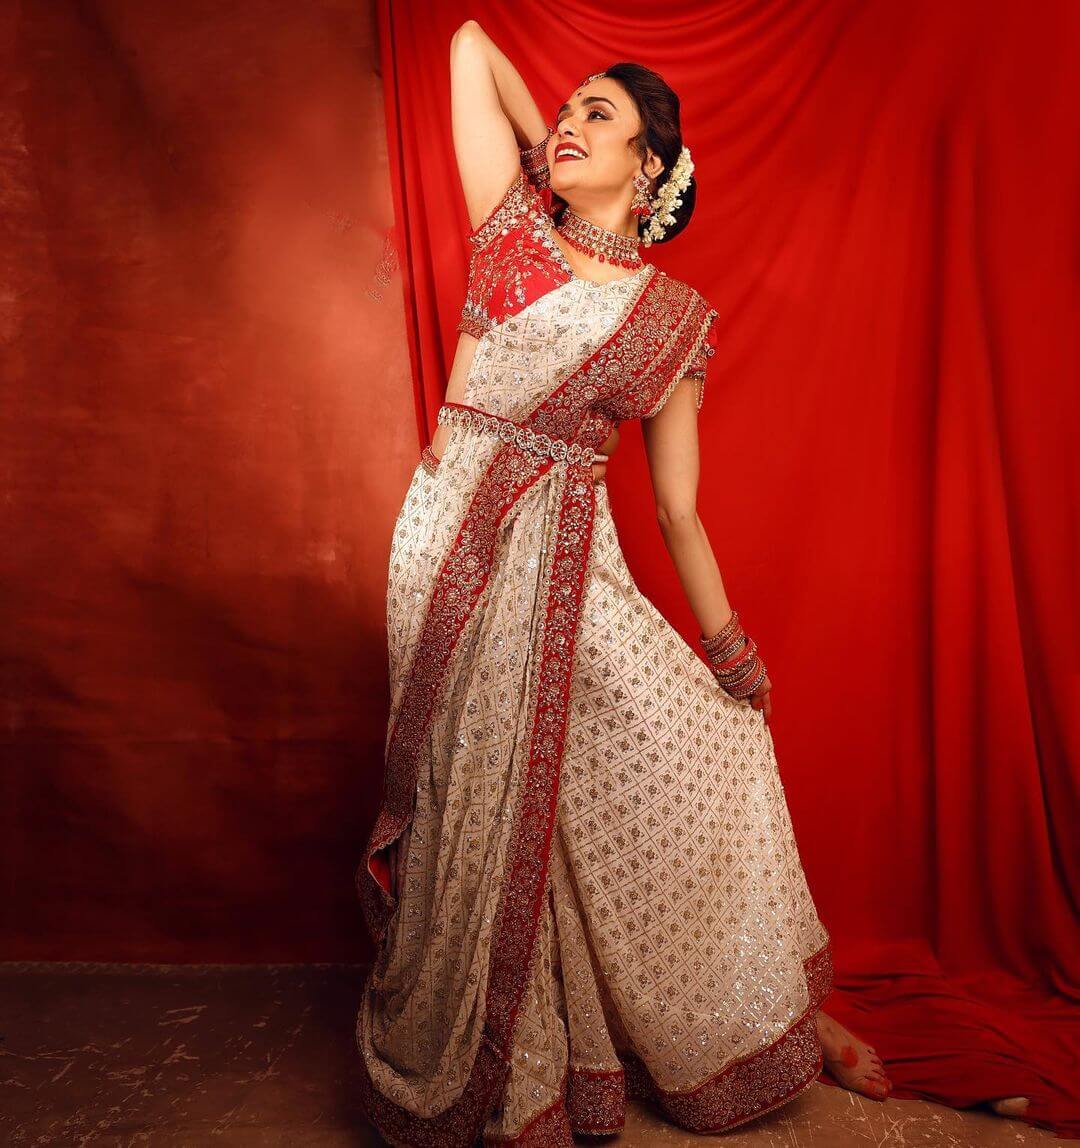 Amruta Khanvilkar Is Looking Beautiful In Off White Embroidered Art Silk Saree